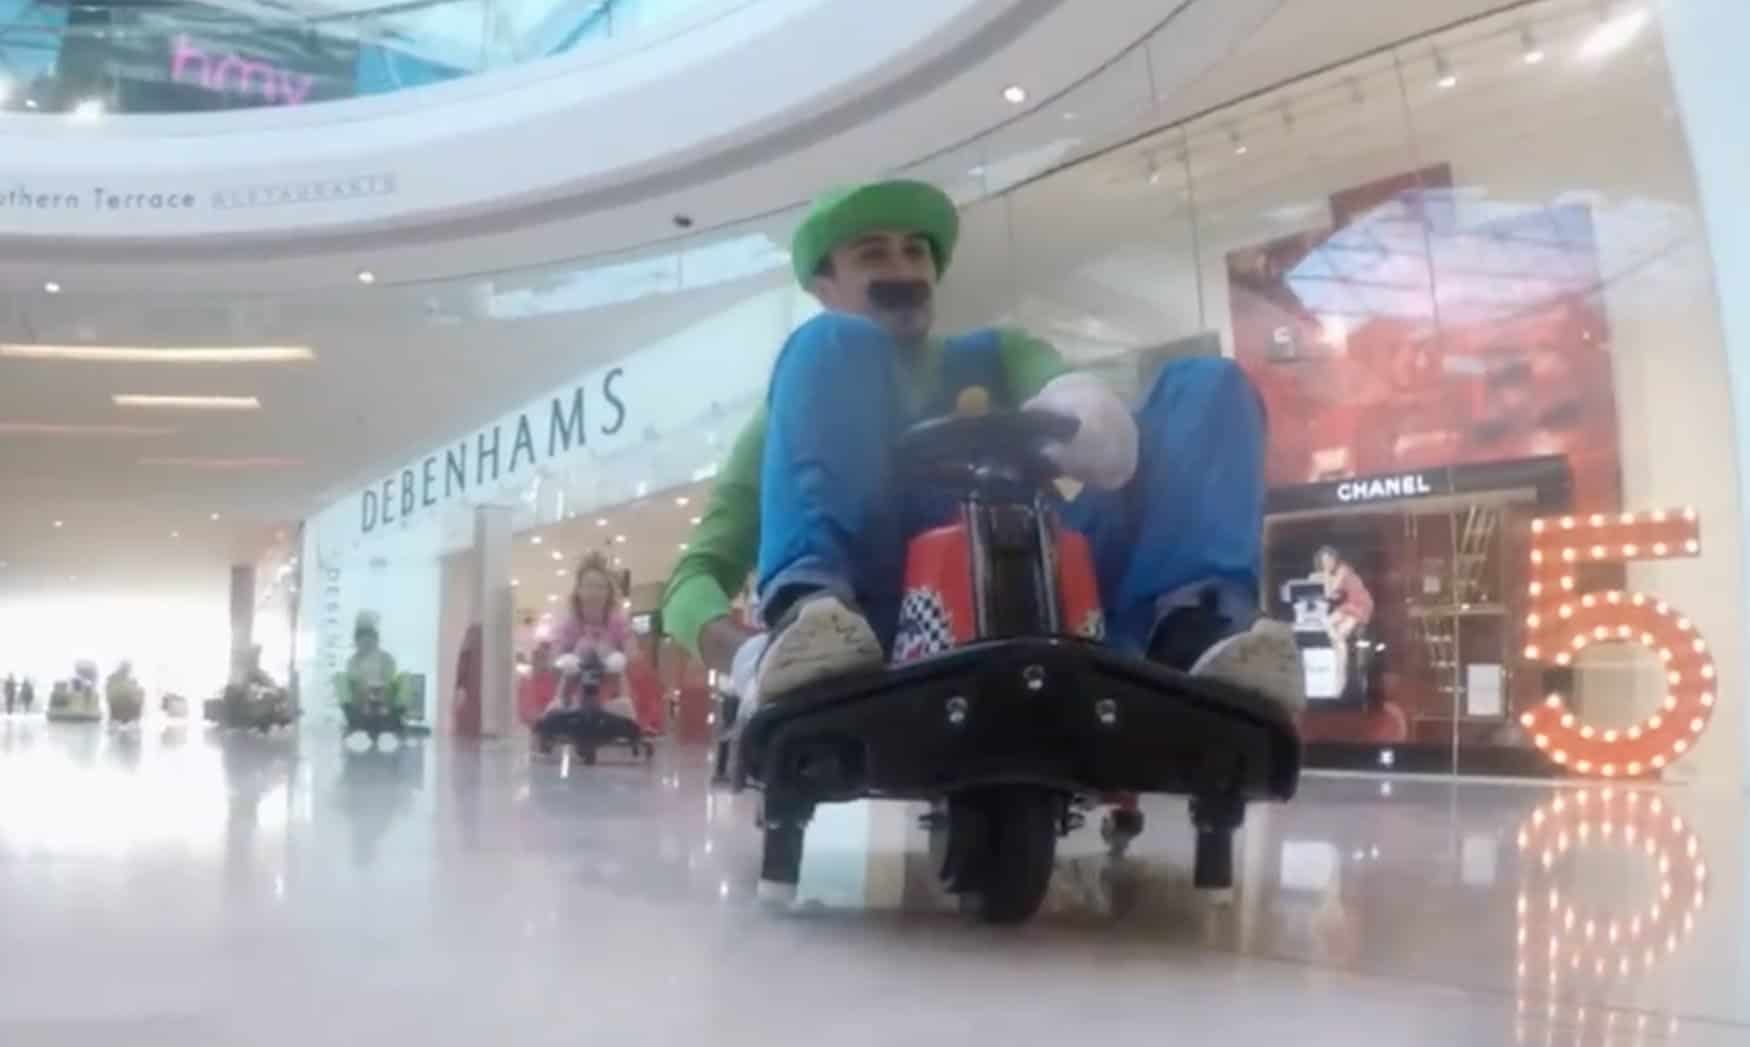 Mario Kart FlashMob i indkøbscenteret